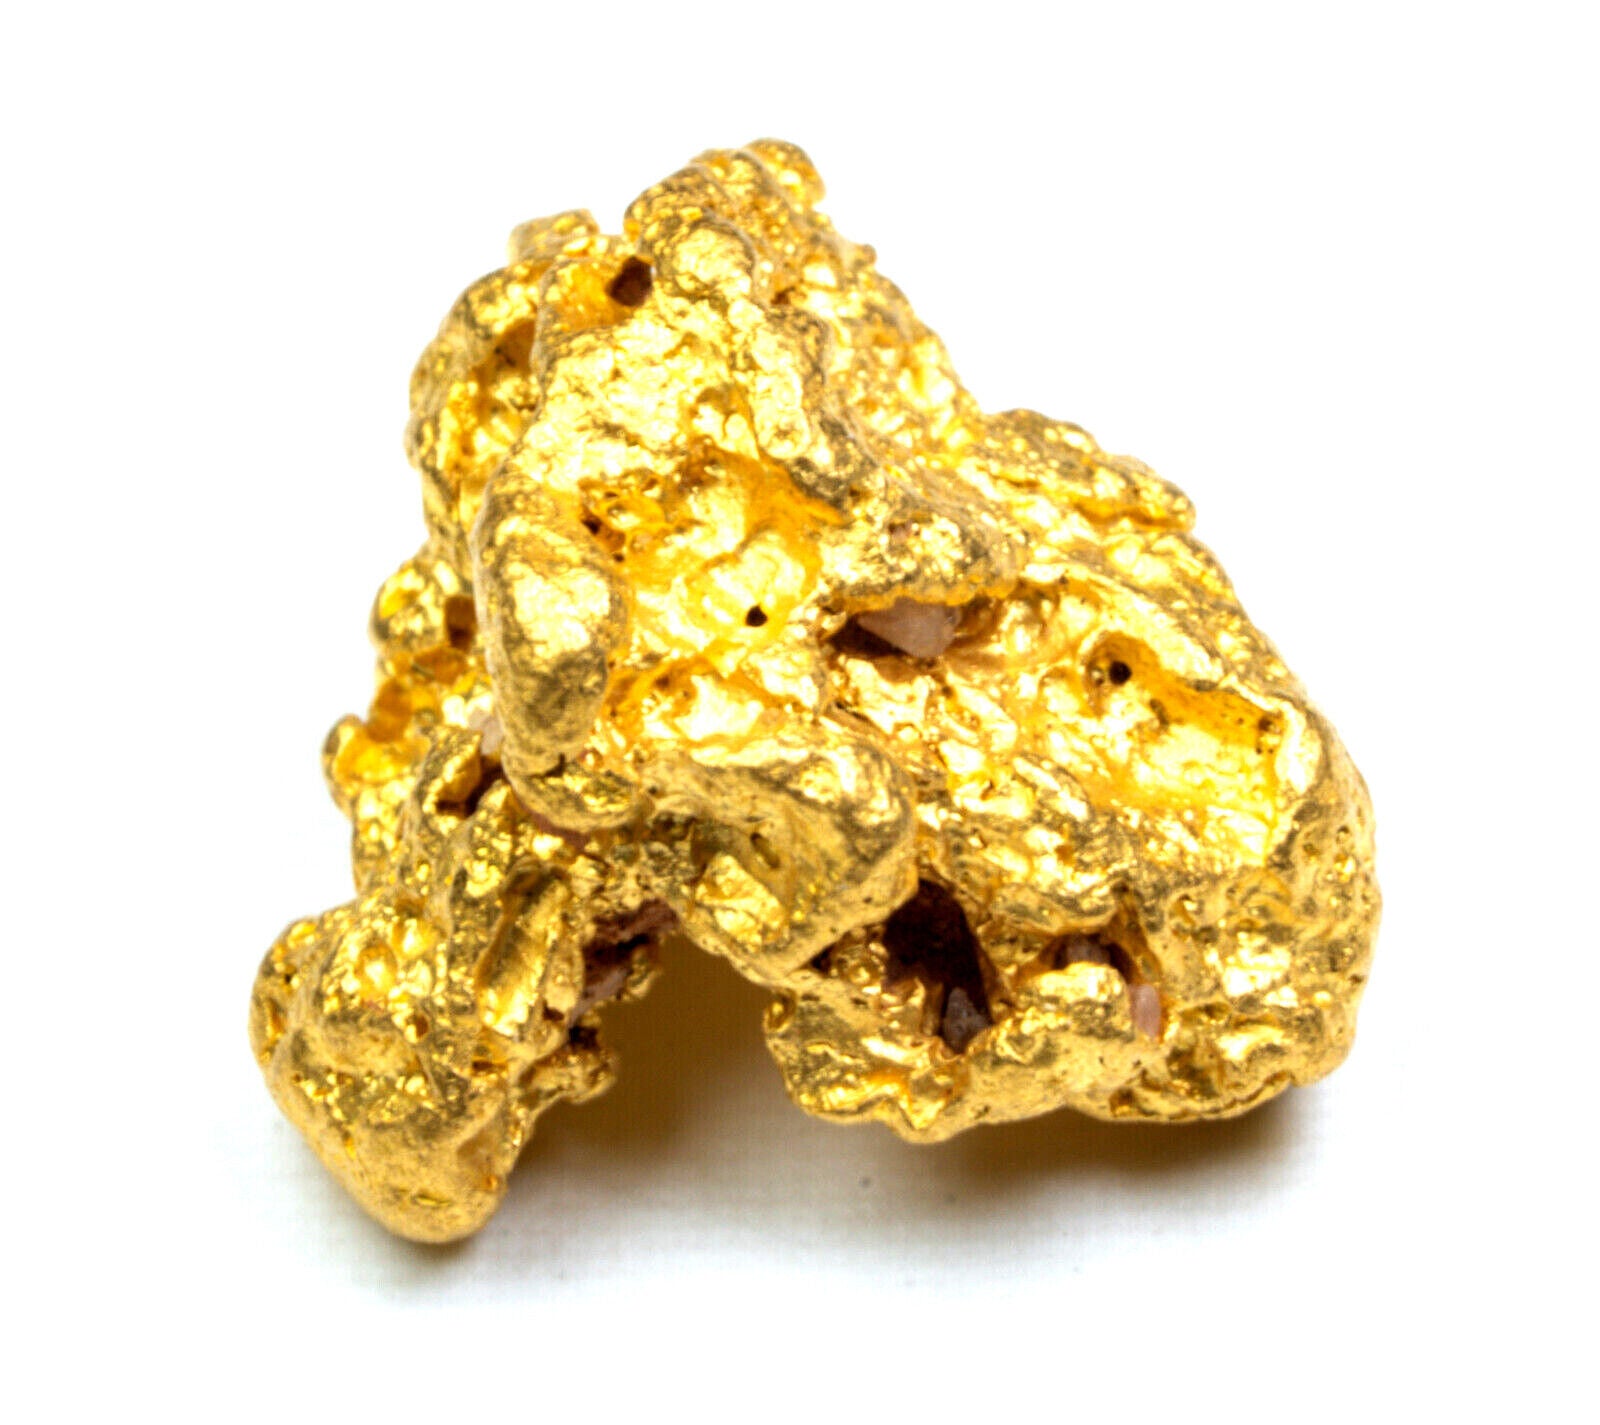 4.695 GRAMS AUSTRALIAN NATURAL PURE GOLD NUGGET GENUINE 94-98% PURE (#AU124)